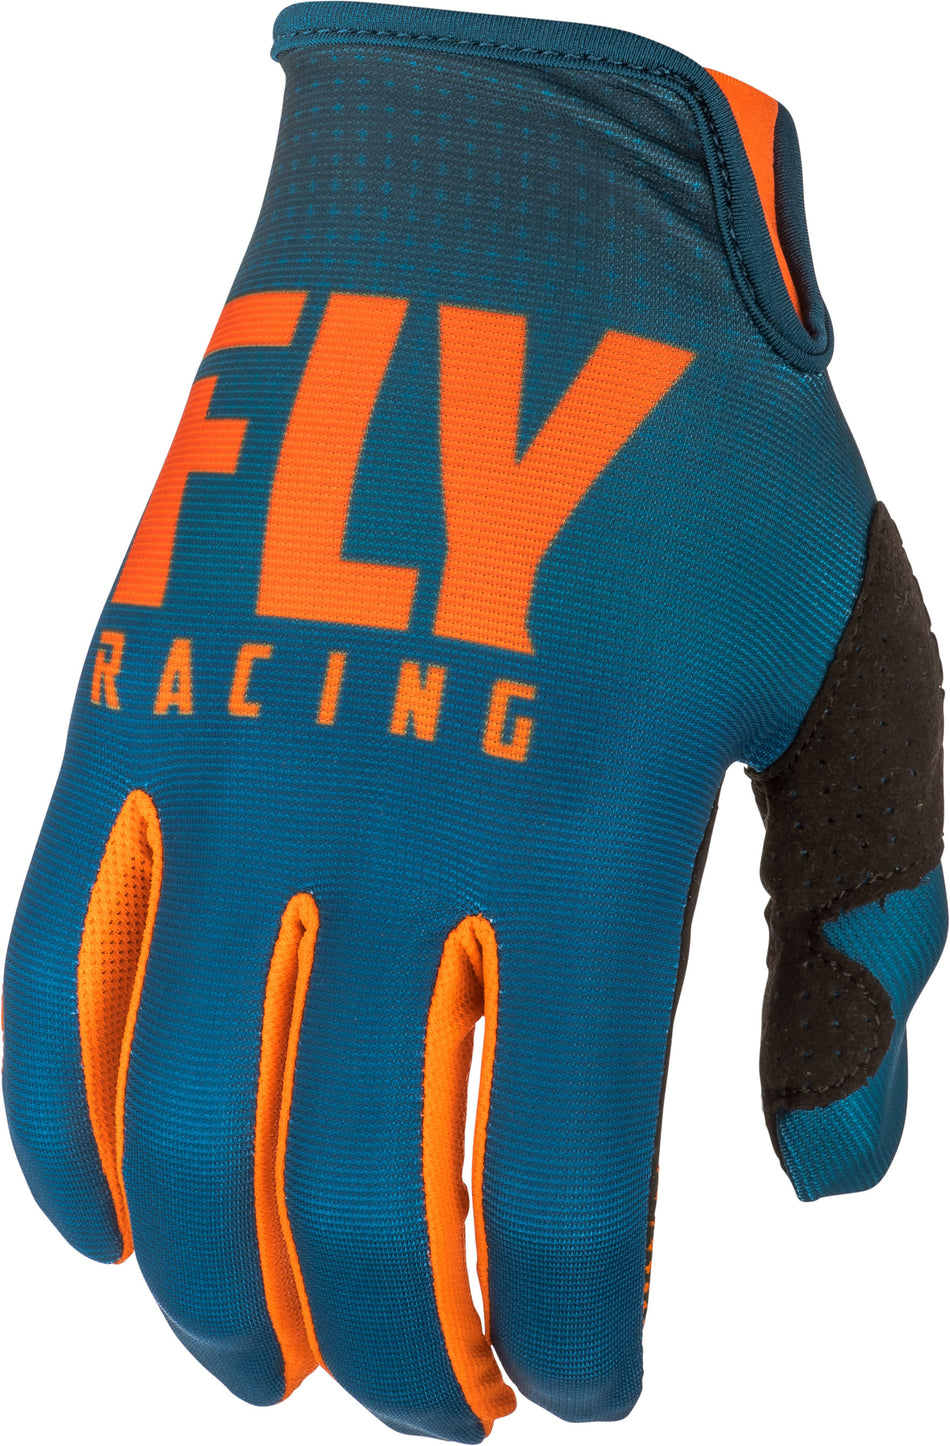 FLY RACING Lite Gloves Orange/Navy Sz 13 372-01613